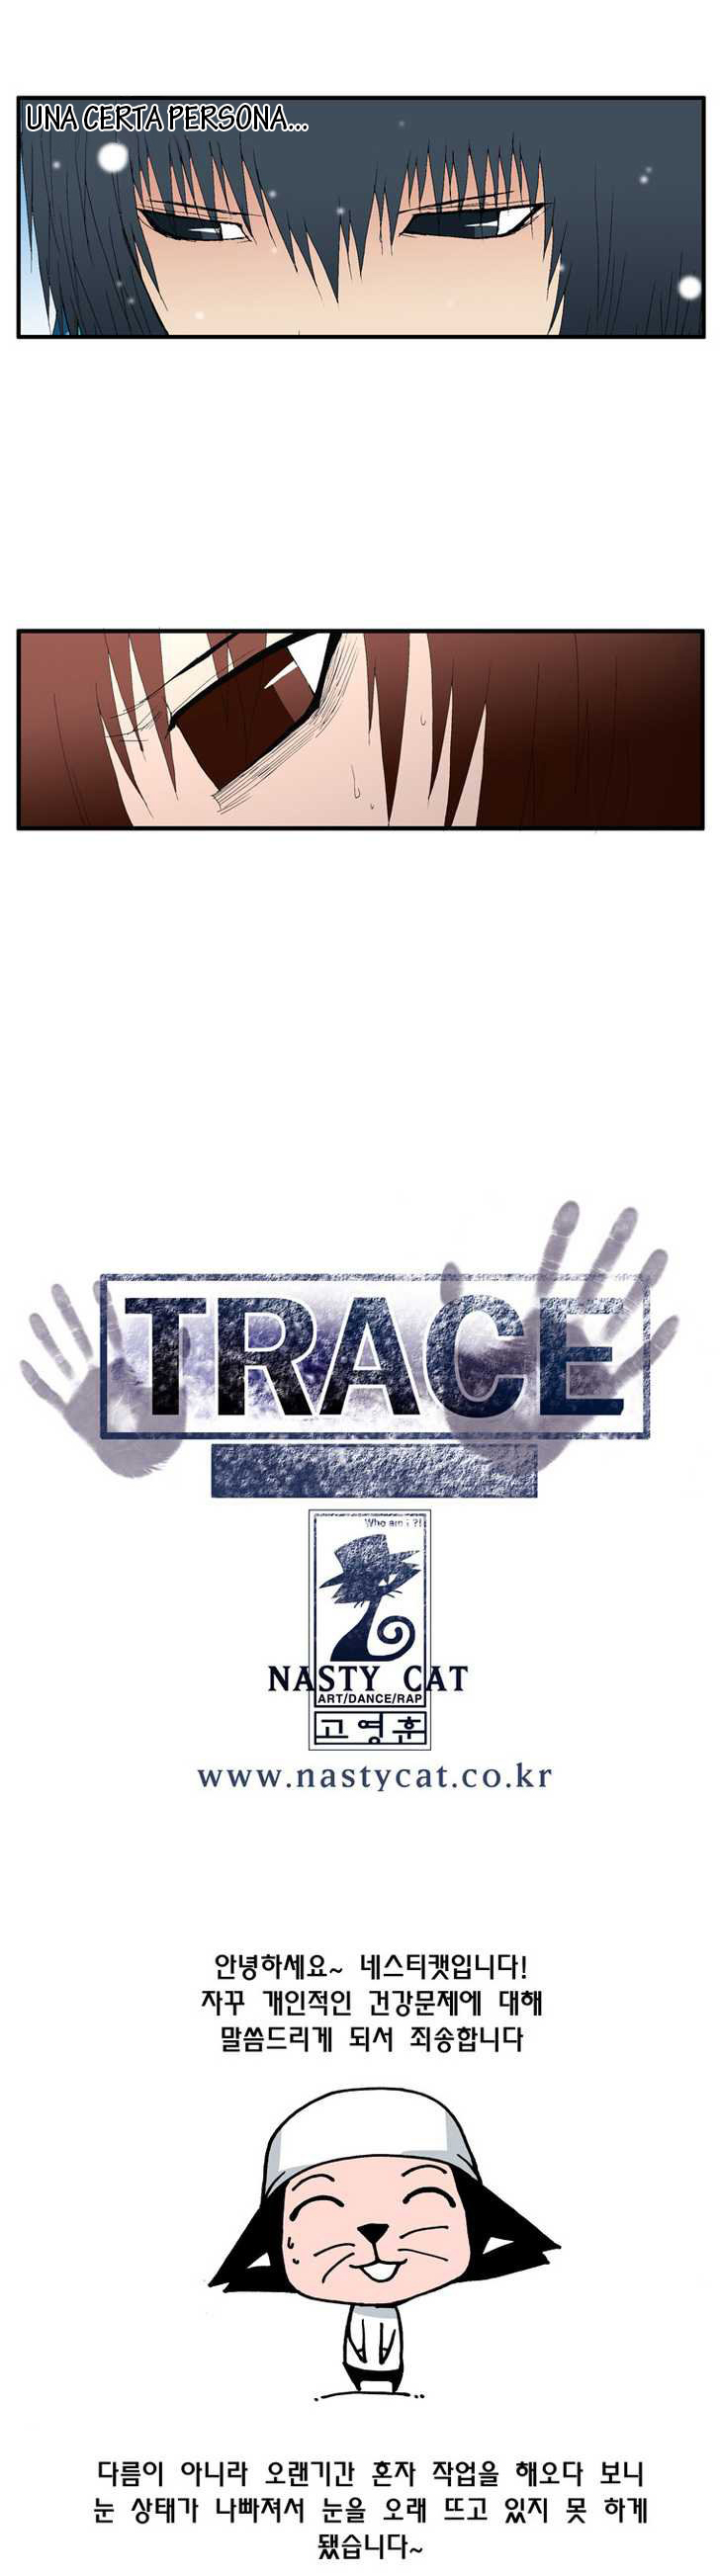 Trace 1.0 - ch 090 Zeurel